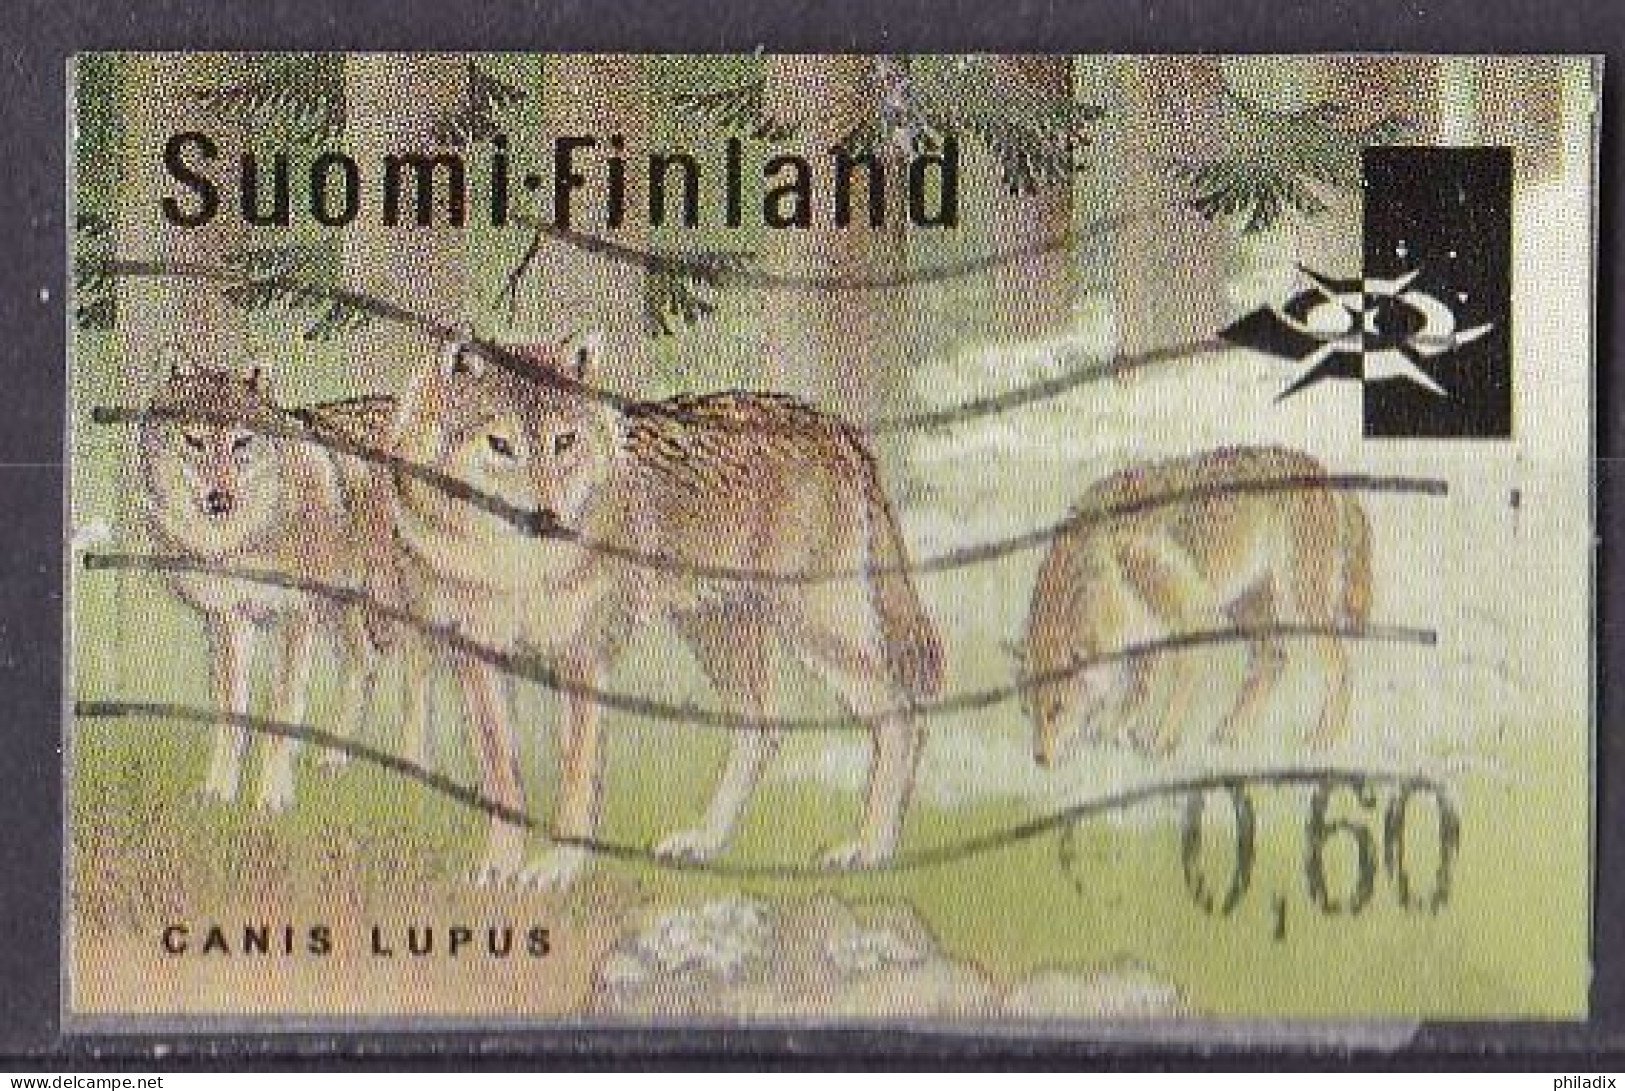 Finnland Marke Von 2002 O/used (A4-9) - Usati